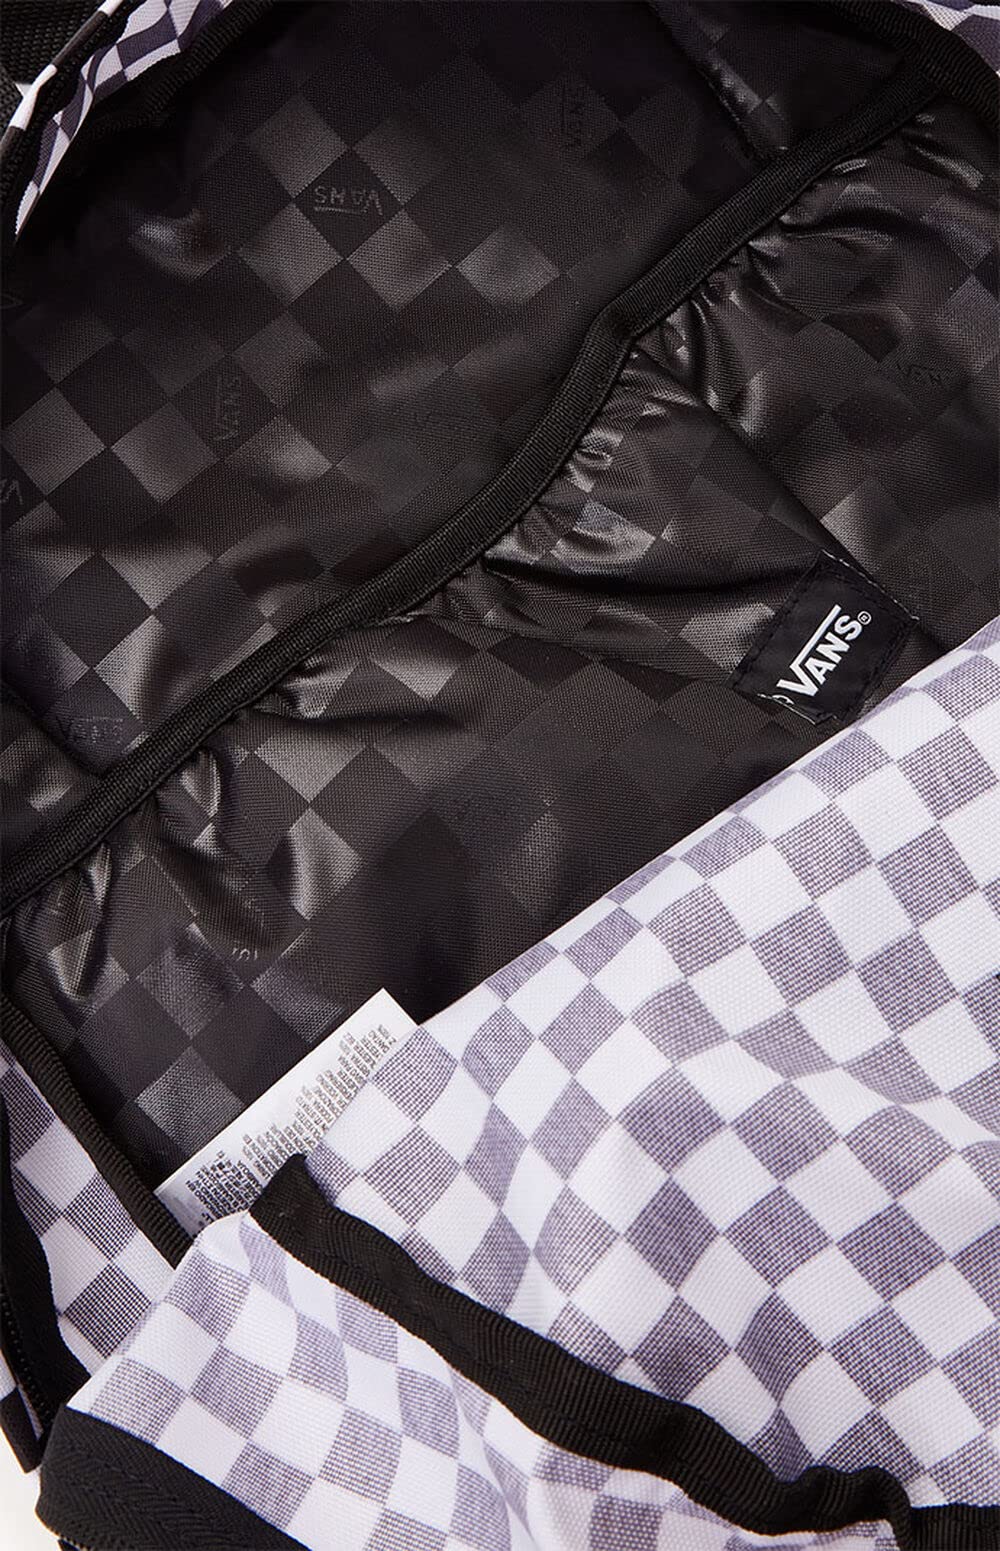 Vans, Old Skool H2O Backpack (Black/White Checkerboard, One Size)